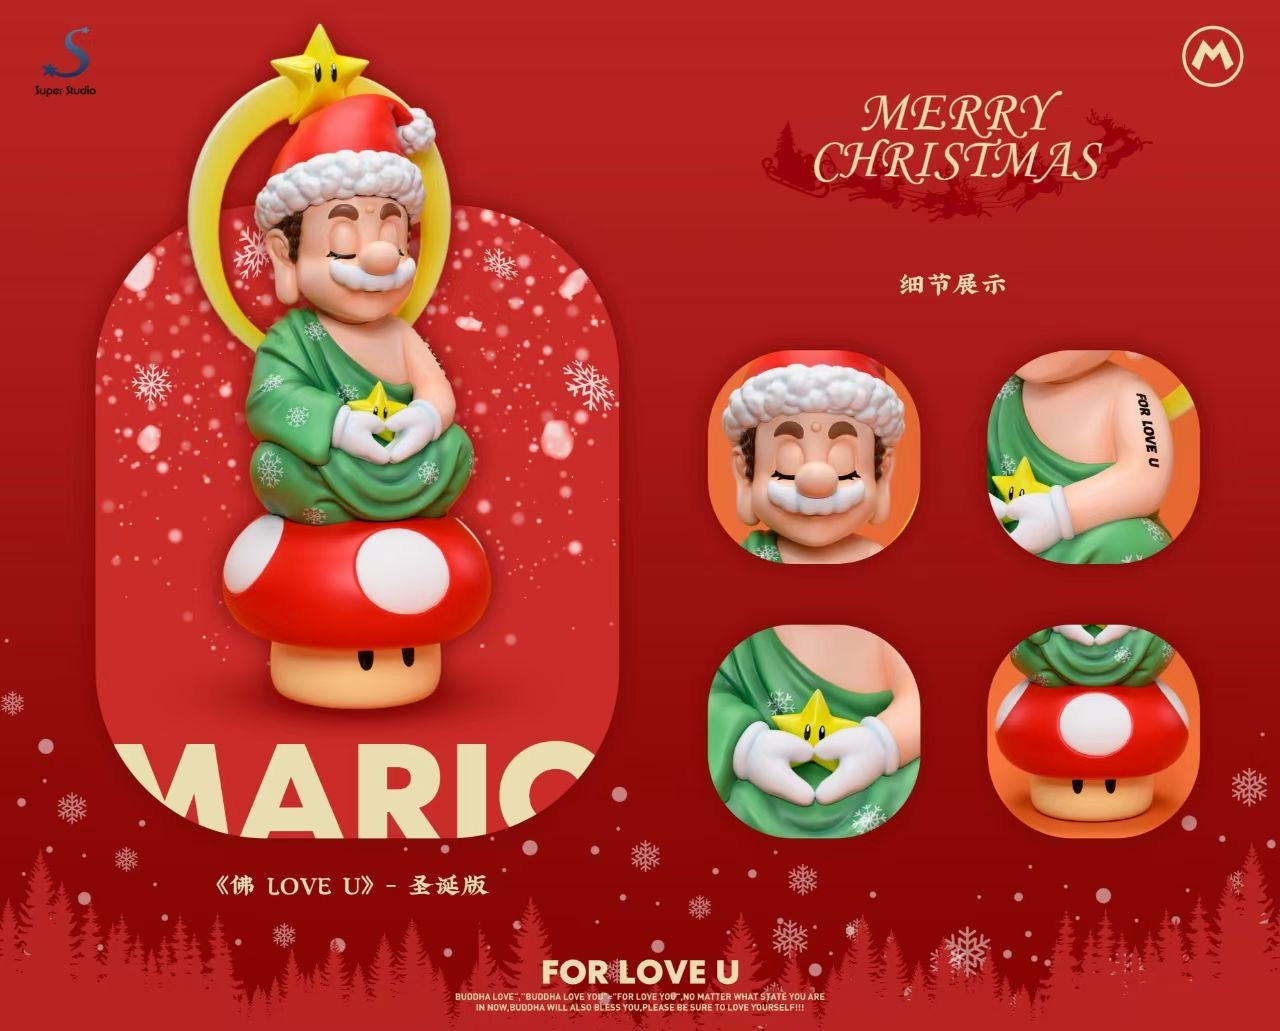 Super Studio - For Love U Buddha Mario (Christmas Version) | 佛爱你 佛祖马里奥 (圣诞版)